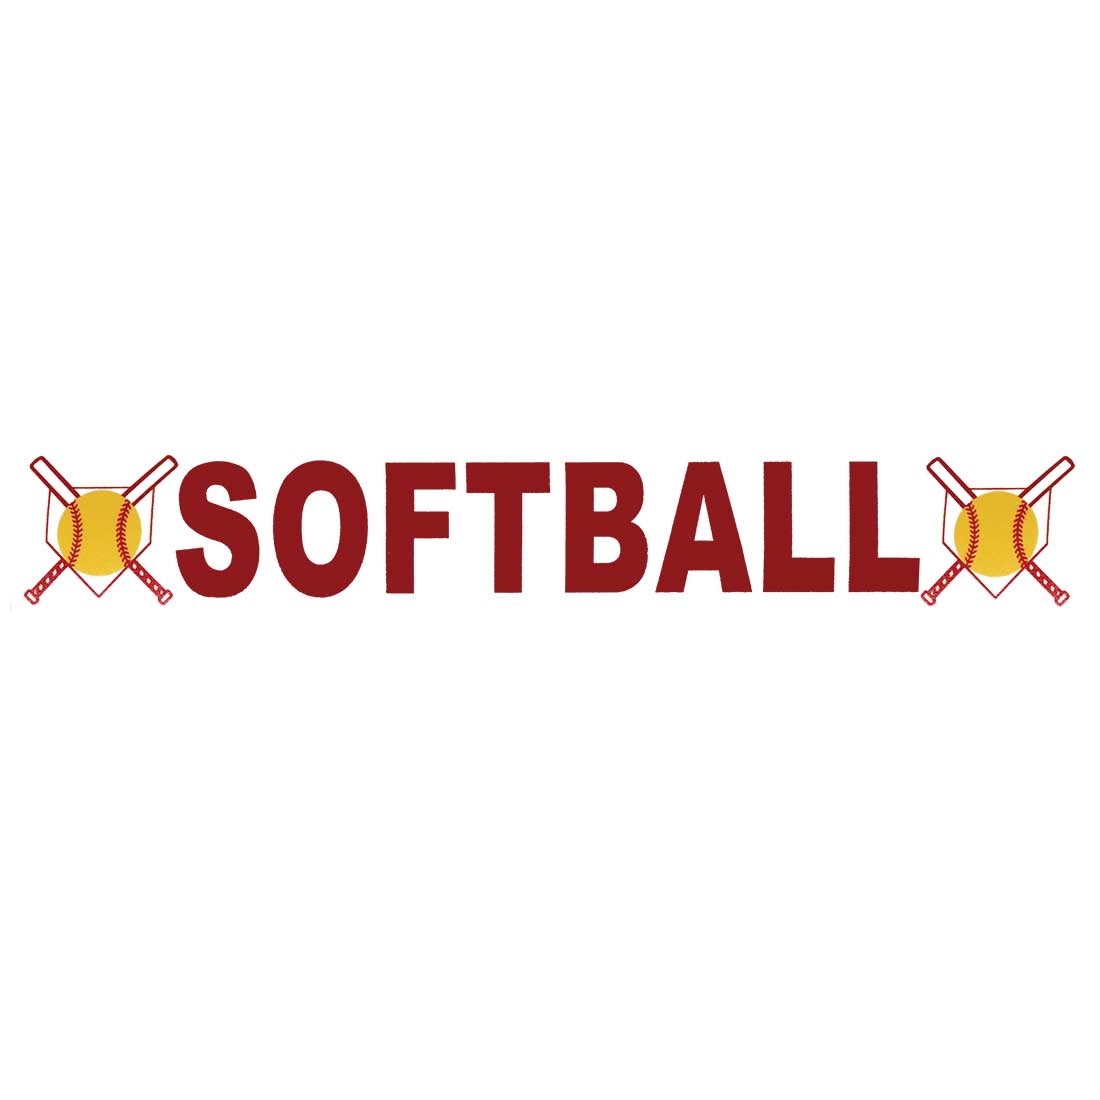 Crossed Bats and Softball Logo - Softball Word Decal with Crossed Bats - longstreth.com